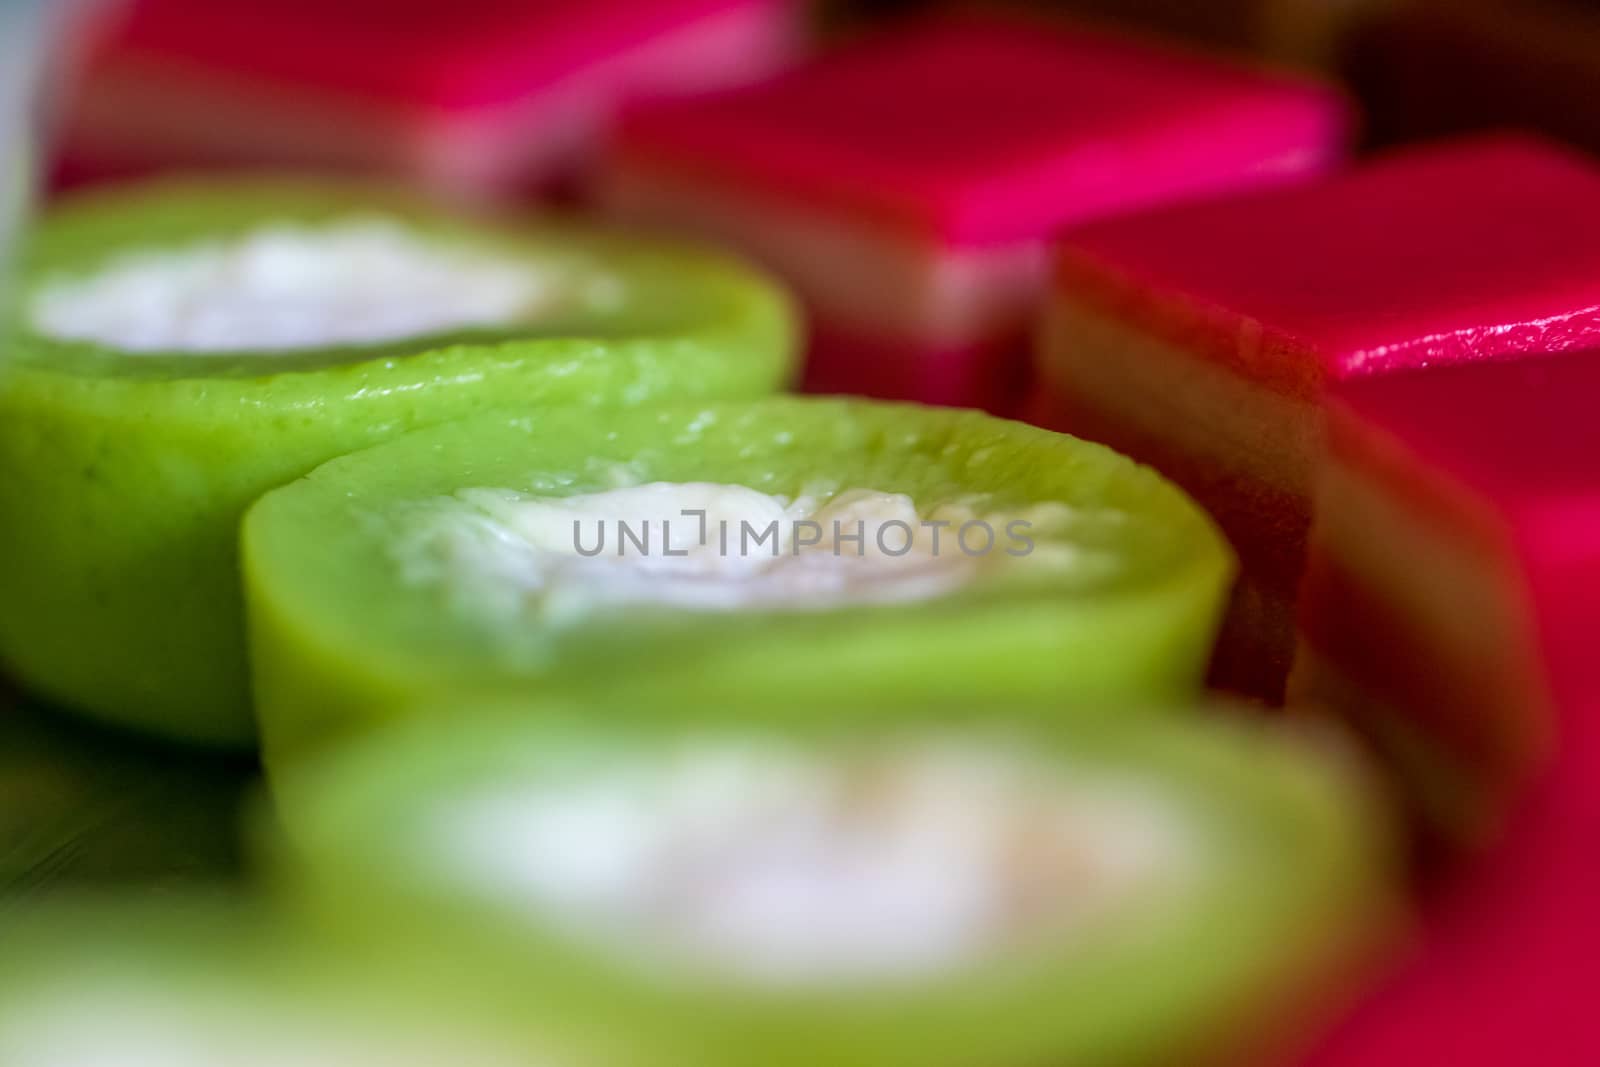 colorful Malaysian sweet cuisine by azamshah72